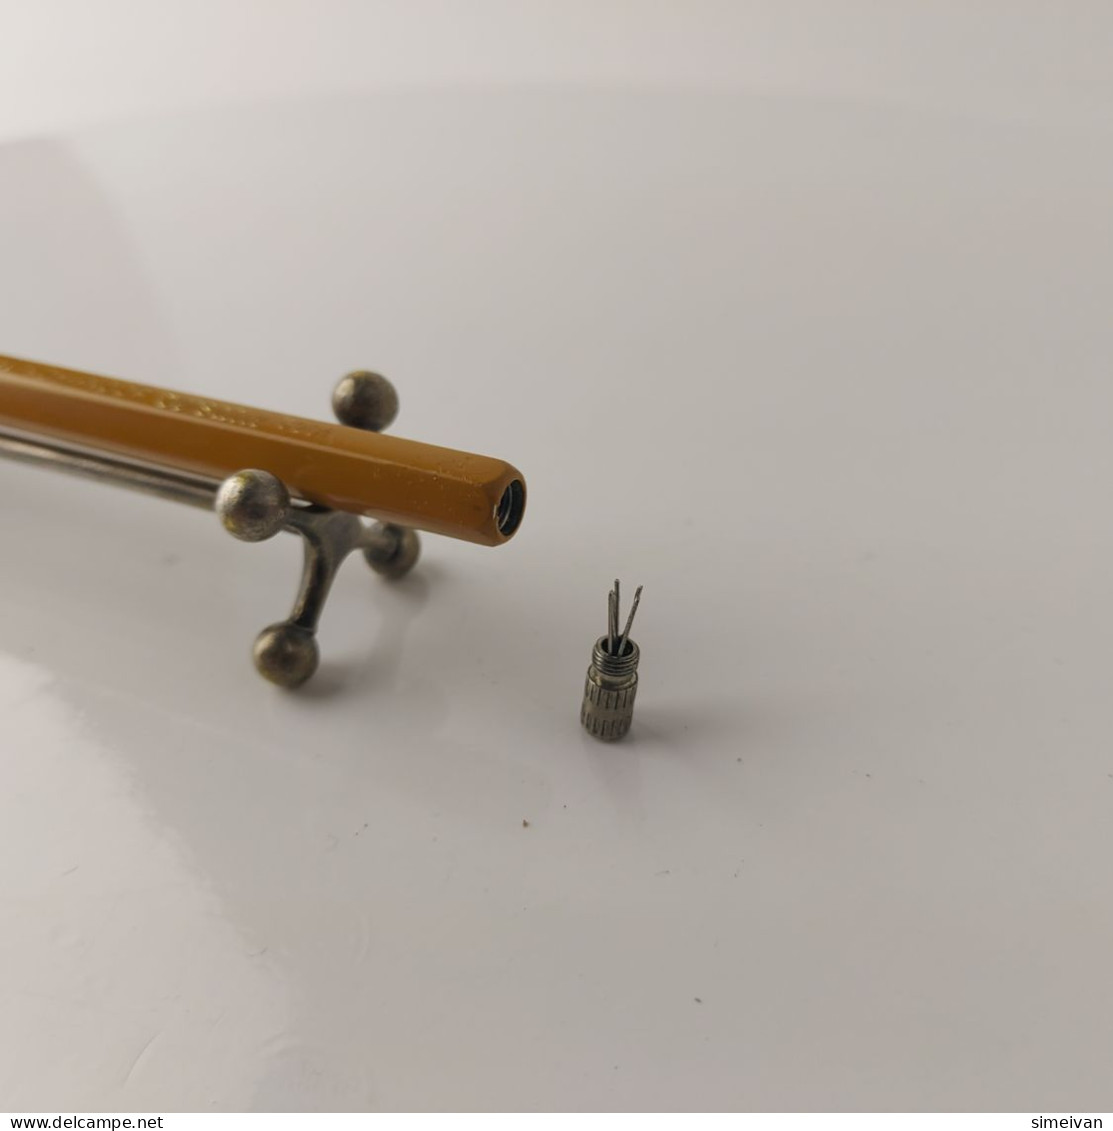 Vintage Mechanical Pencil 2mm KOH-I-NOOR Versatil 5201 Metal #5519